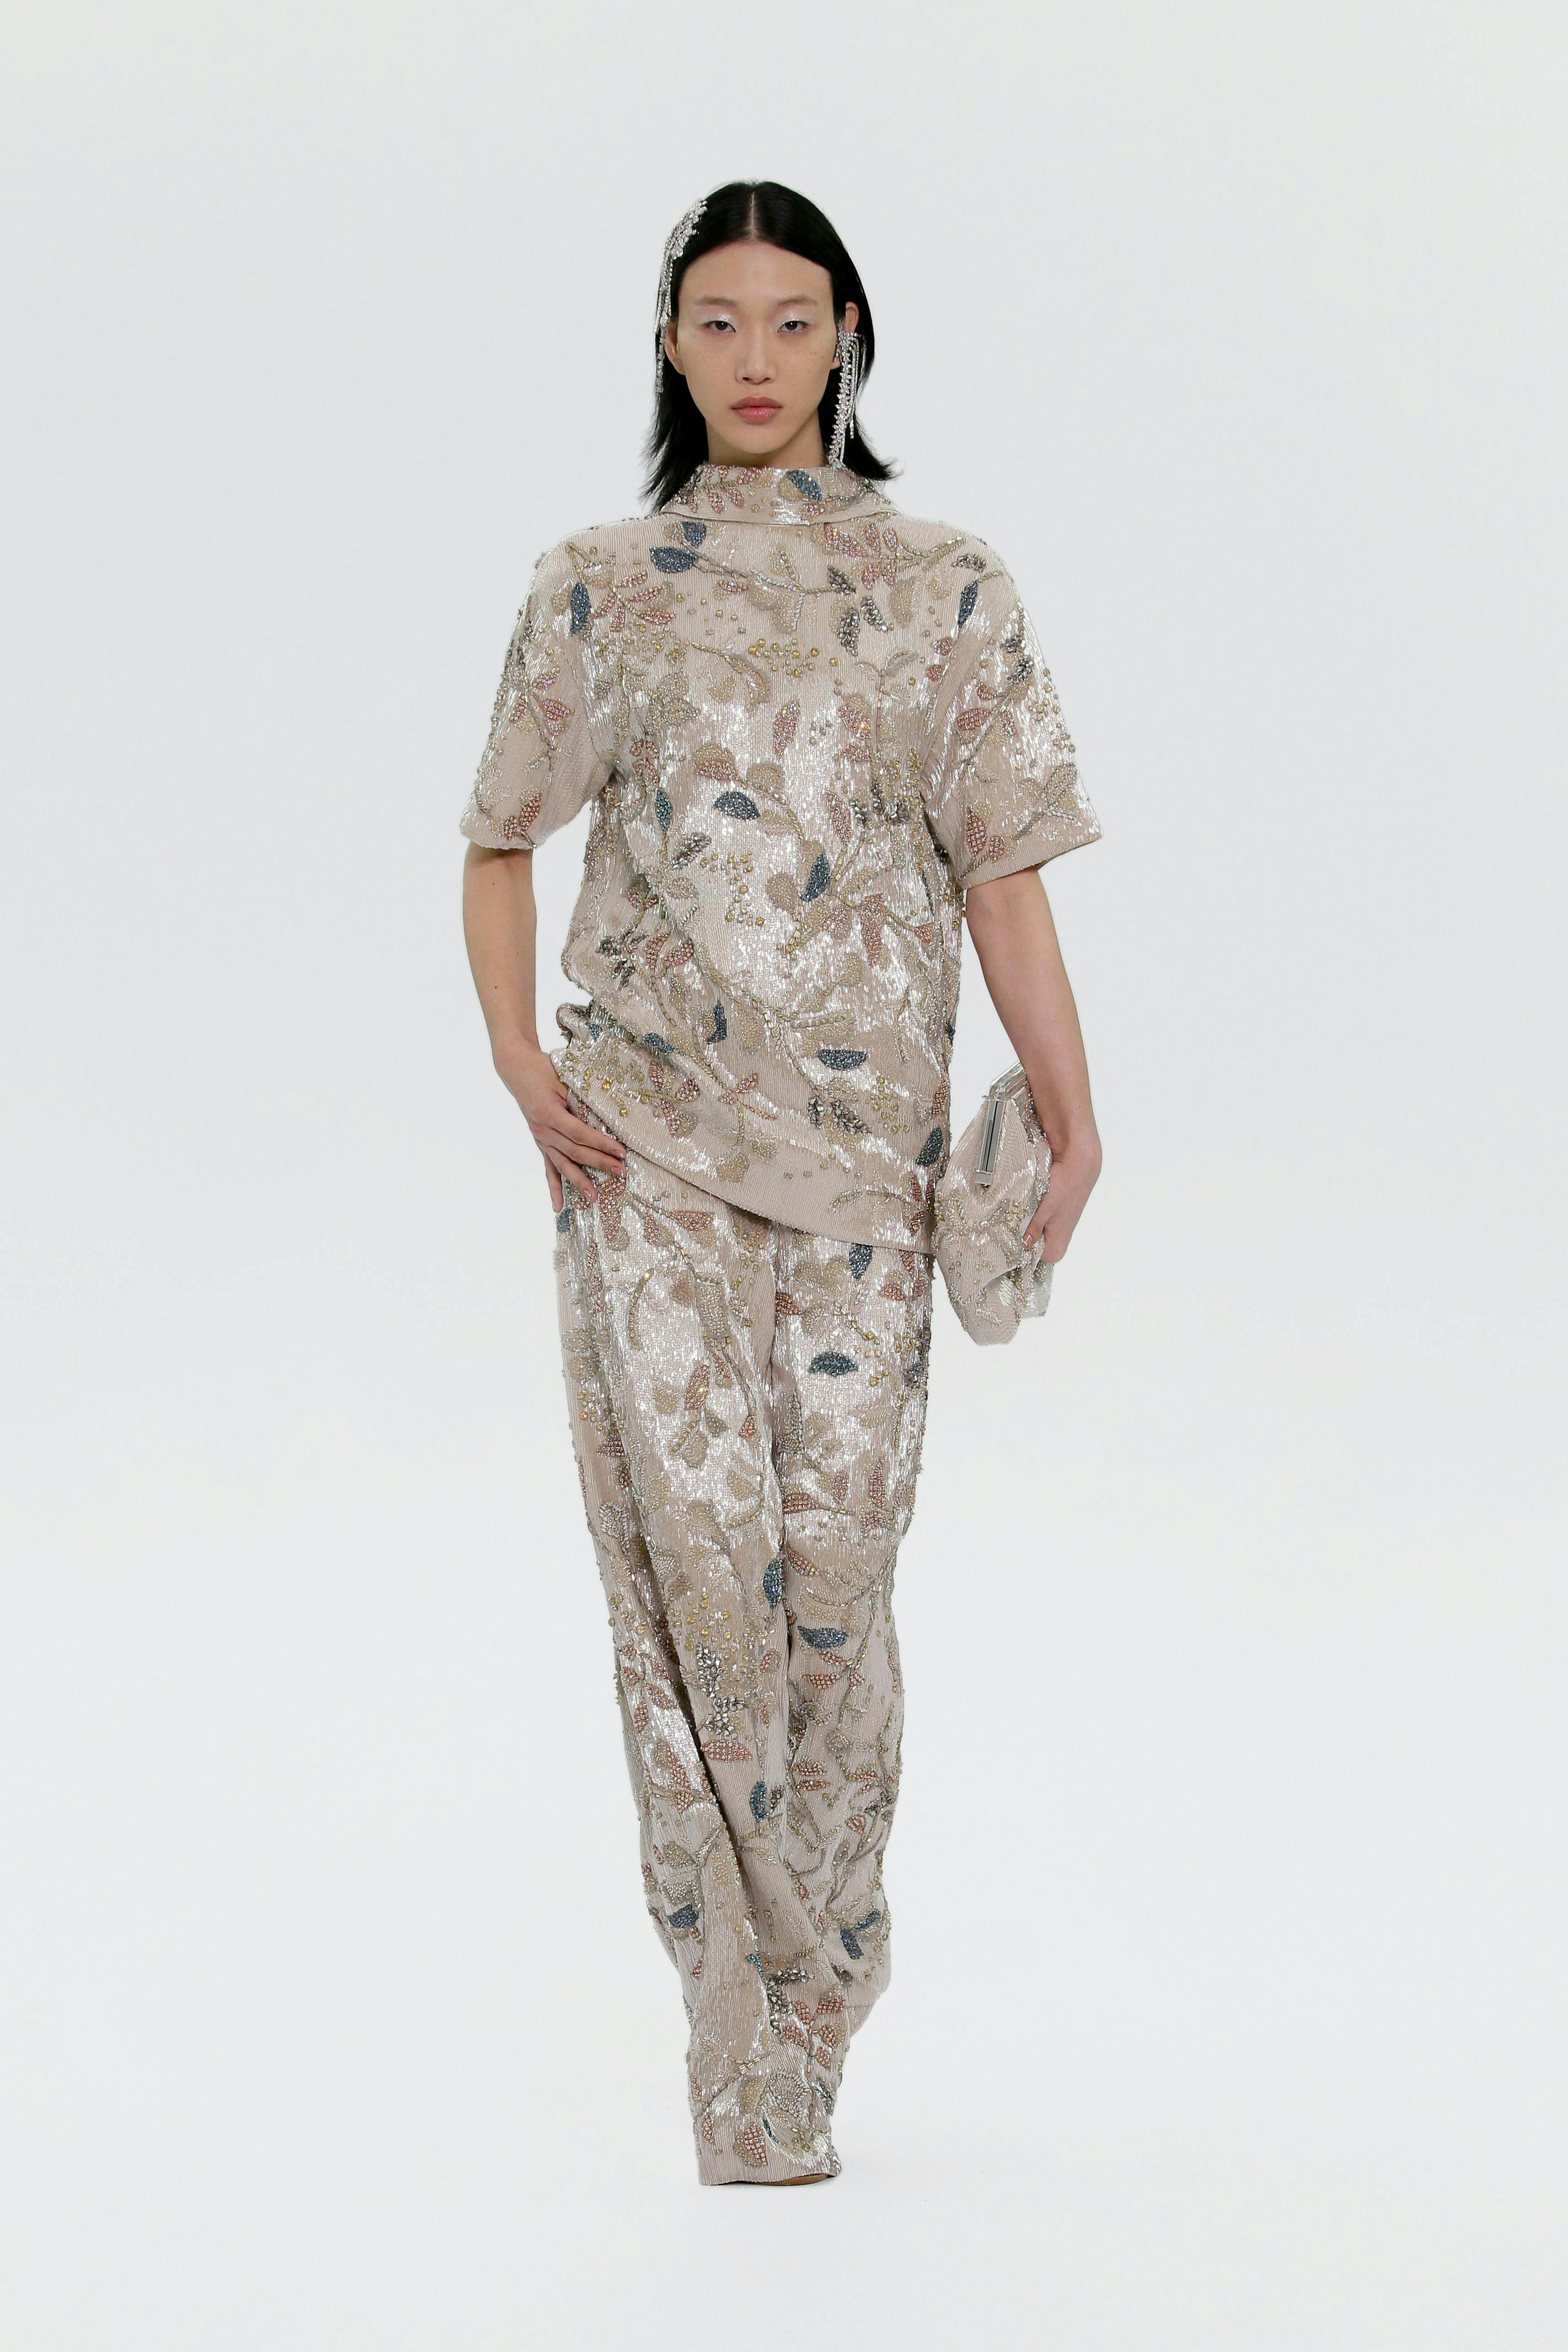 military uniform military person human pajamas clothing apparel dress